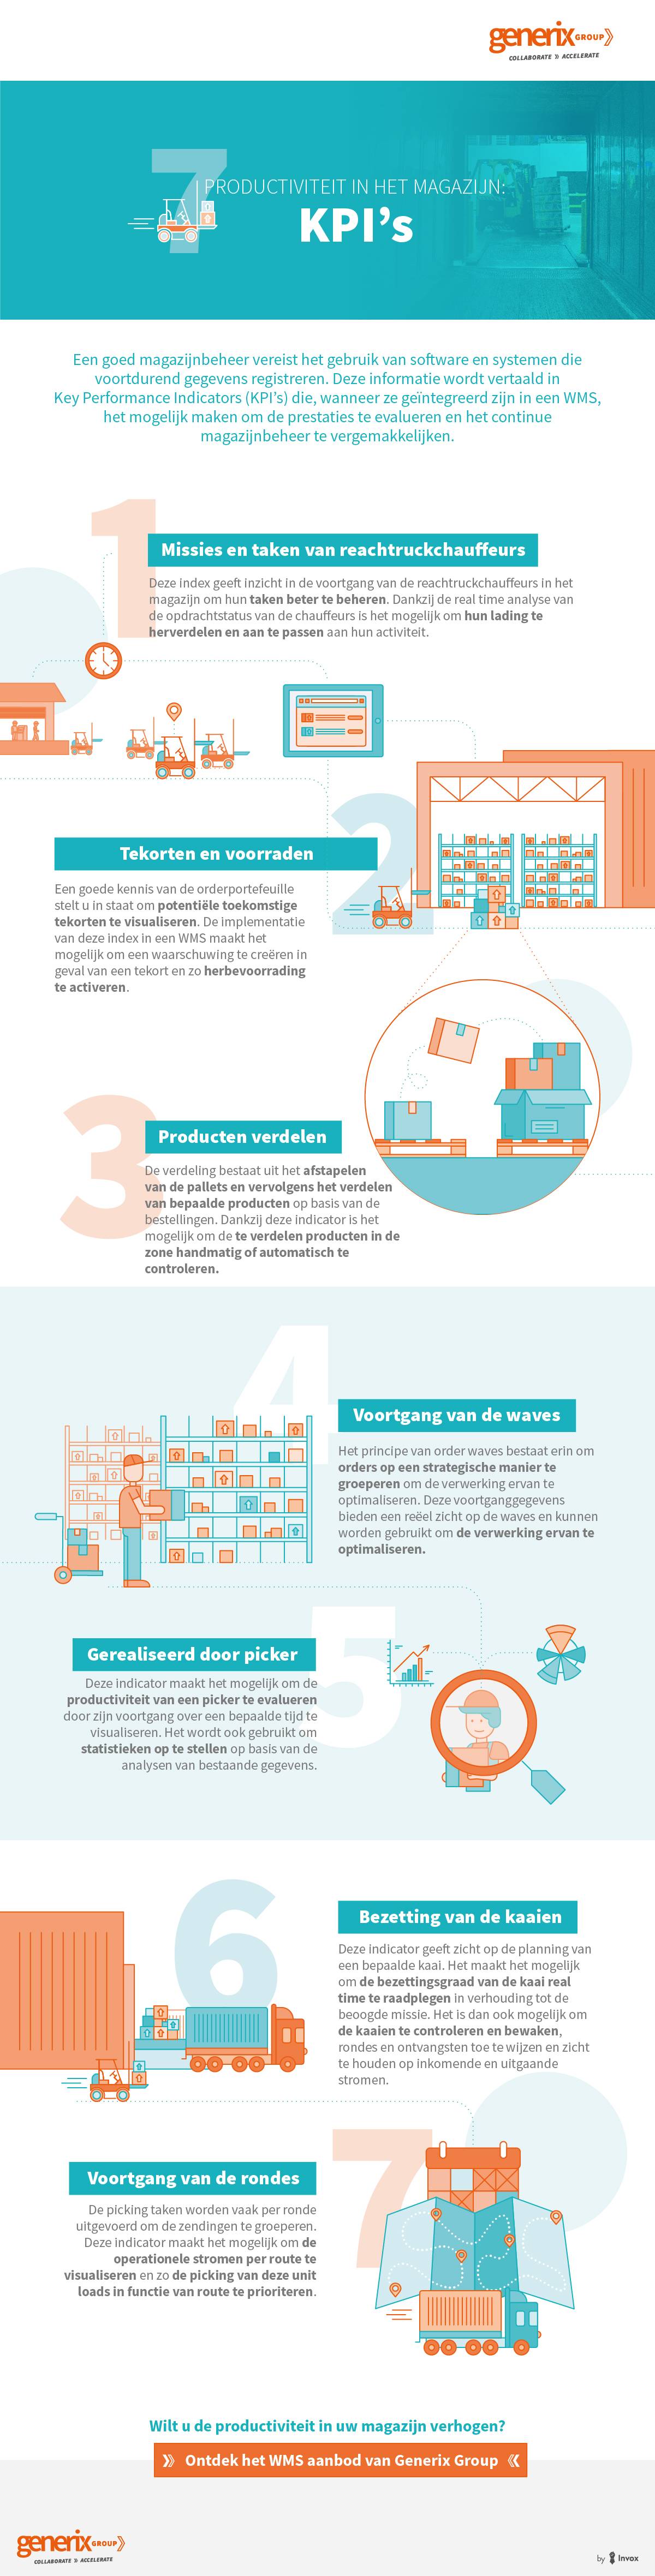 infographic-productiviteit-magazijn-KPI